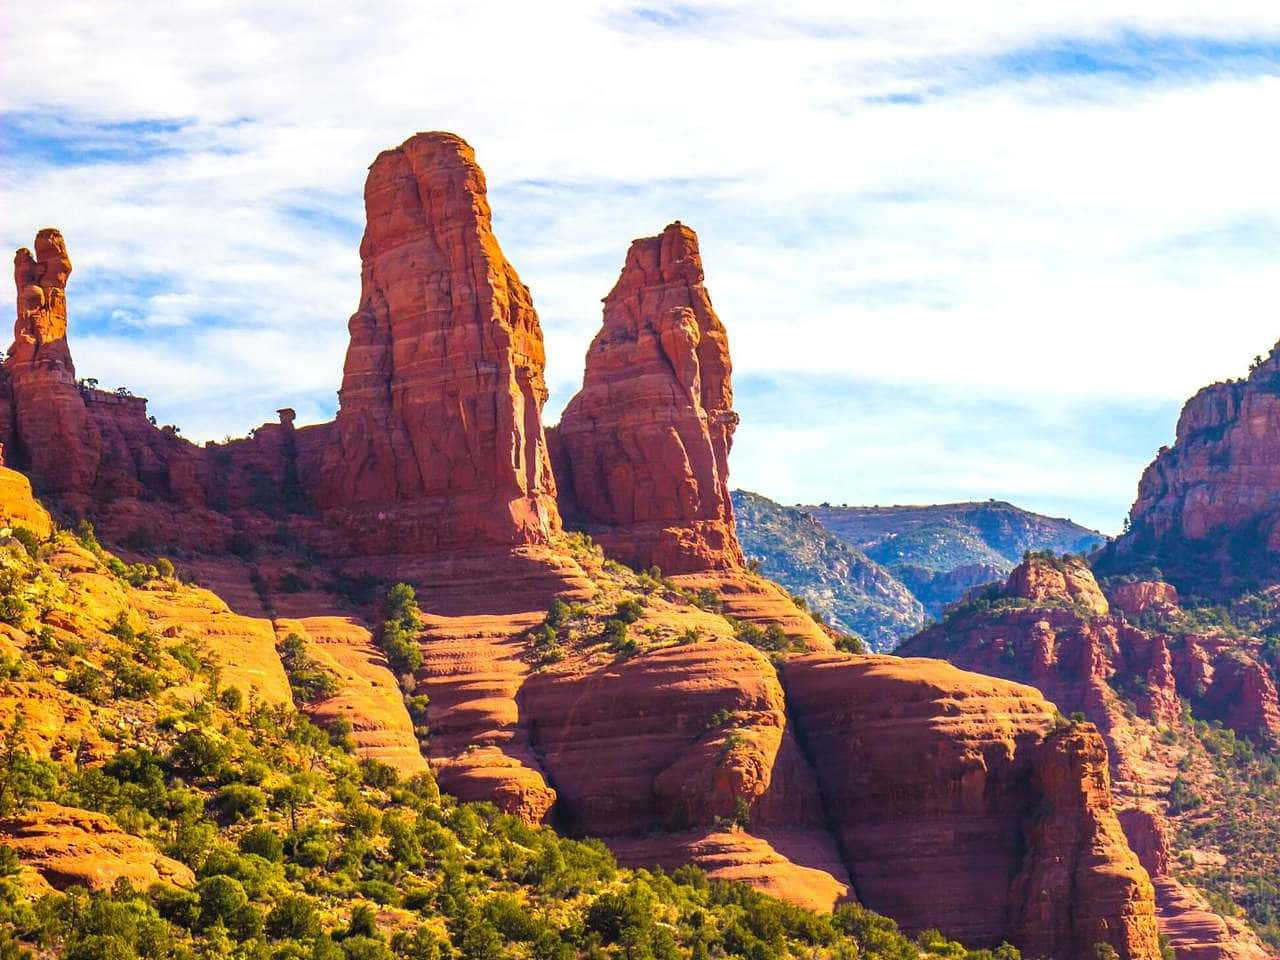 The beauty of the Arizona landscape is breathtaking